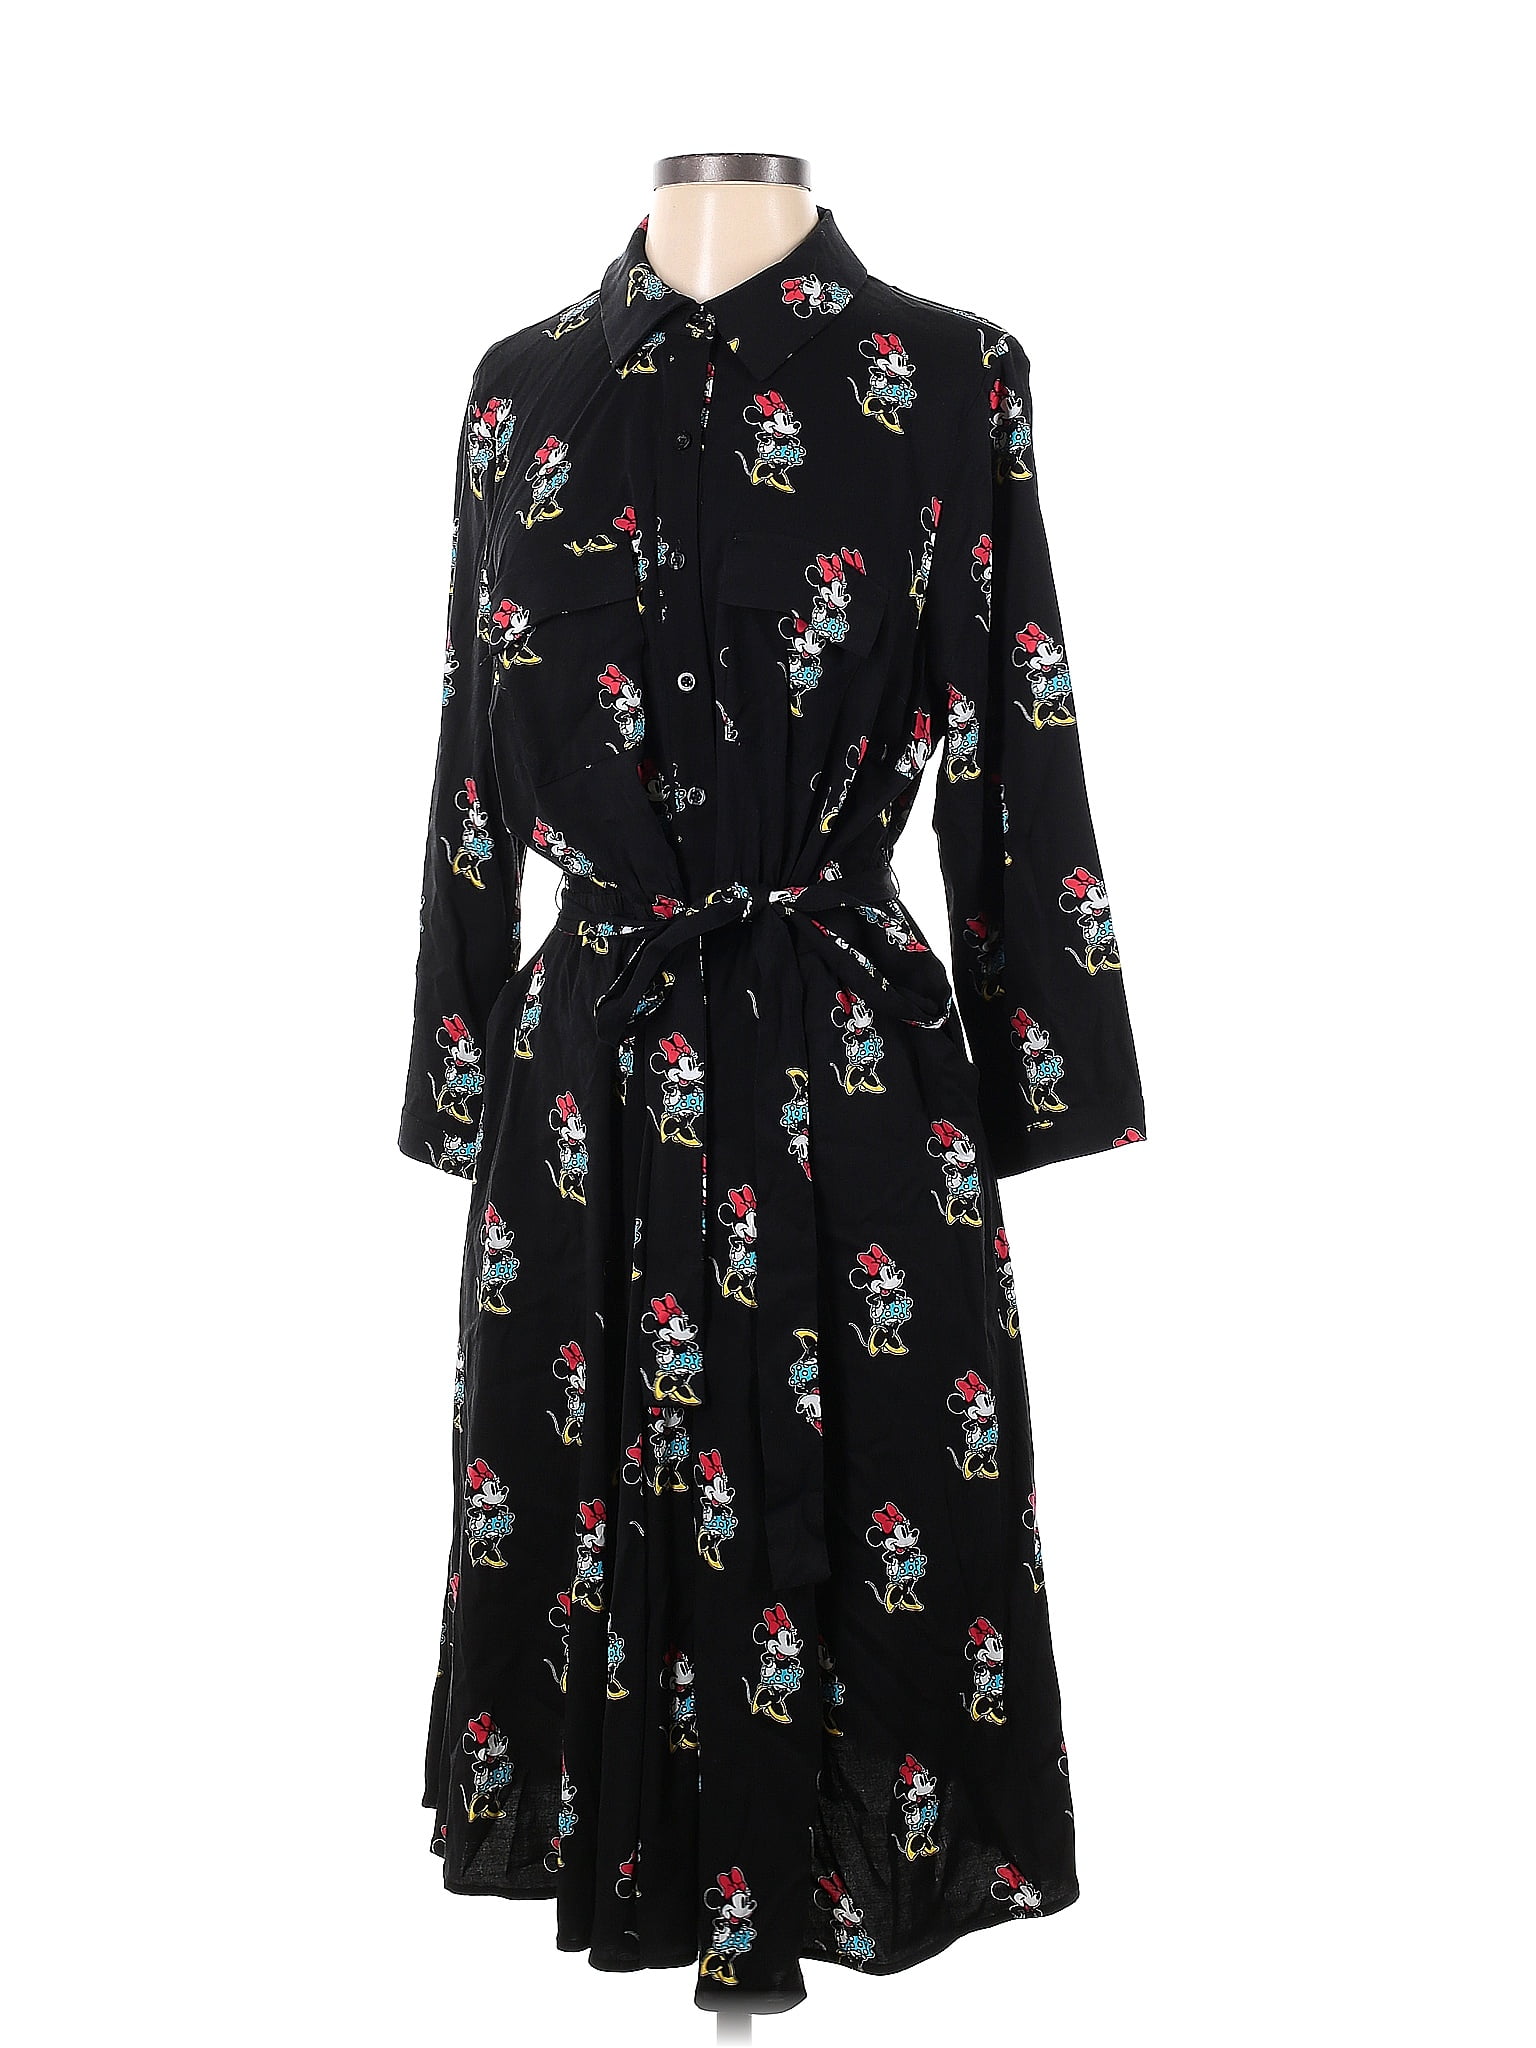 Disney Floral Black Casual Dress Size 1 - 52% off | thredUP